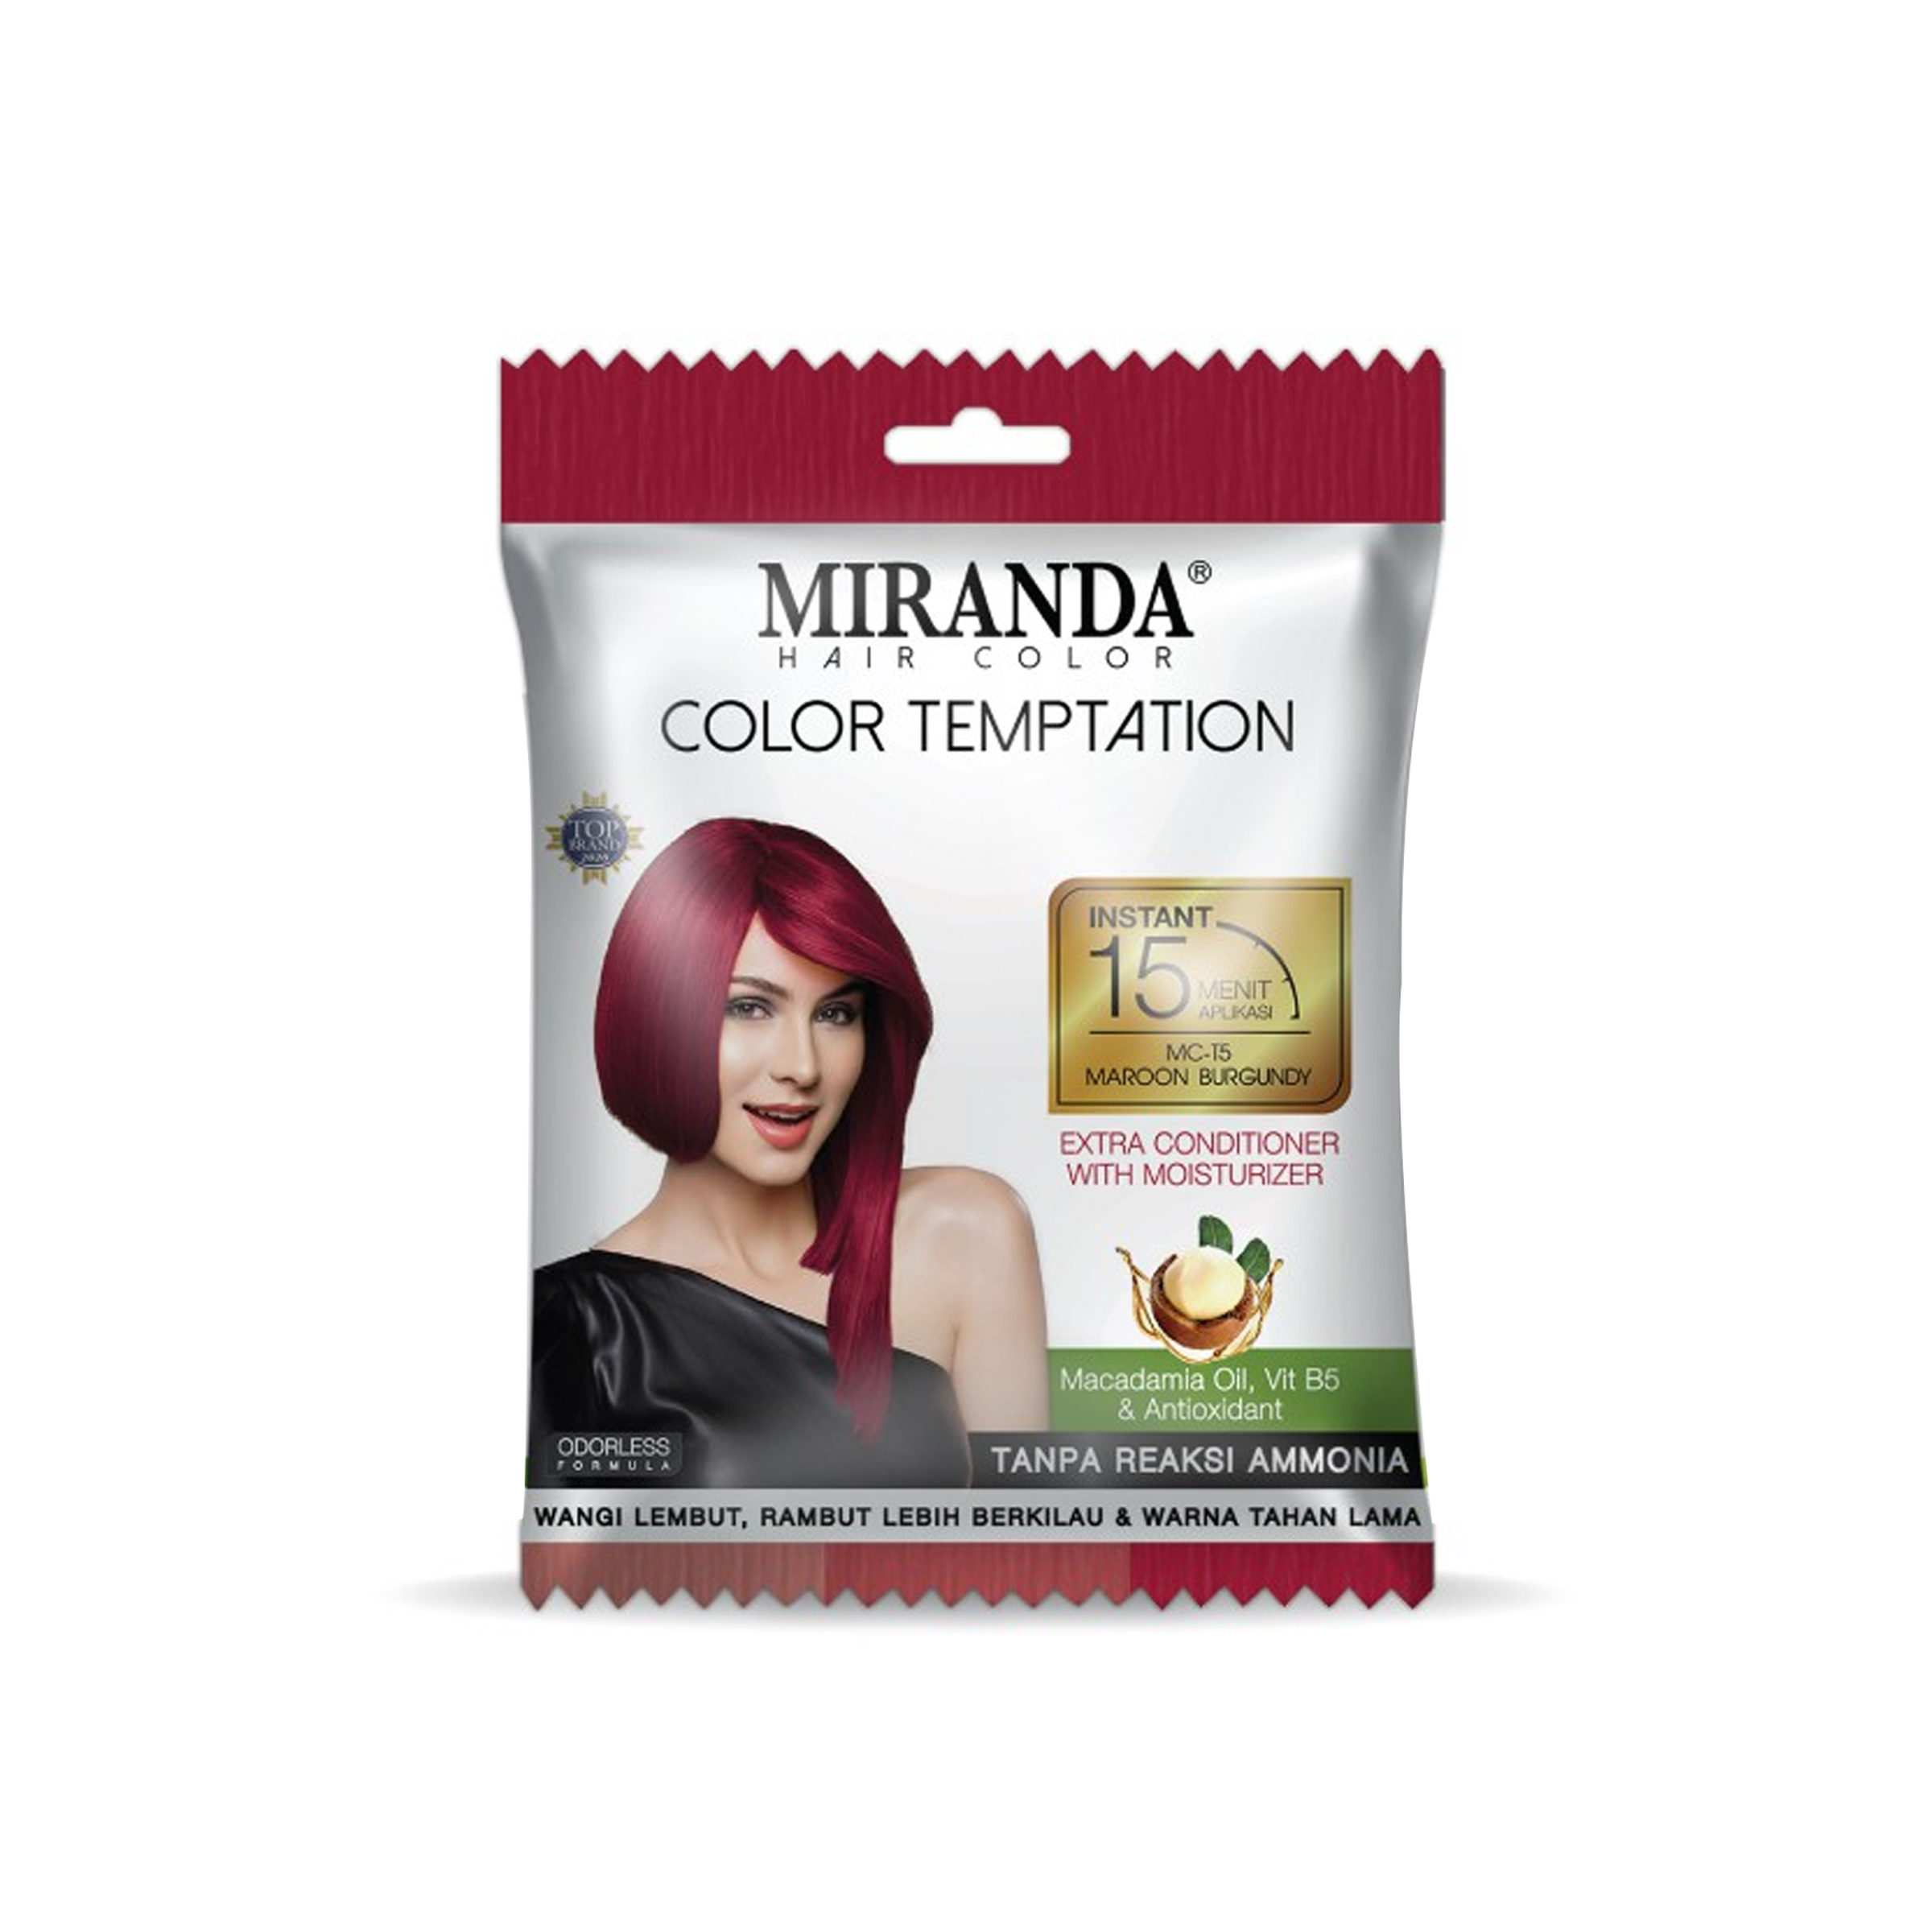 Miranda Hair Color Temptation MC T5 Maroon Burgundy 20 ml